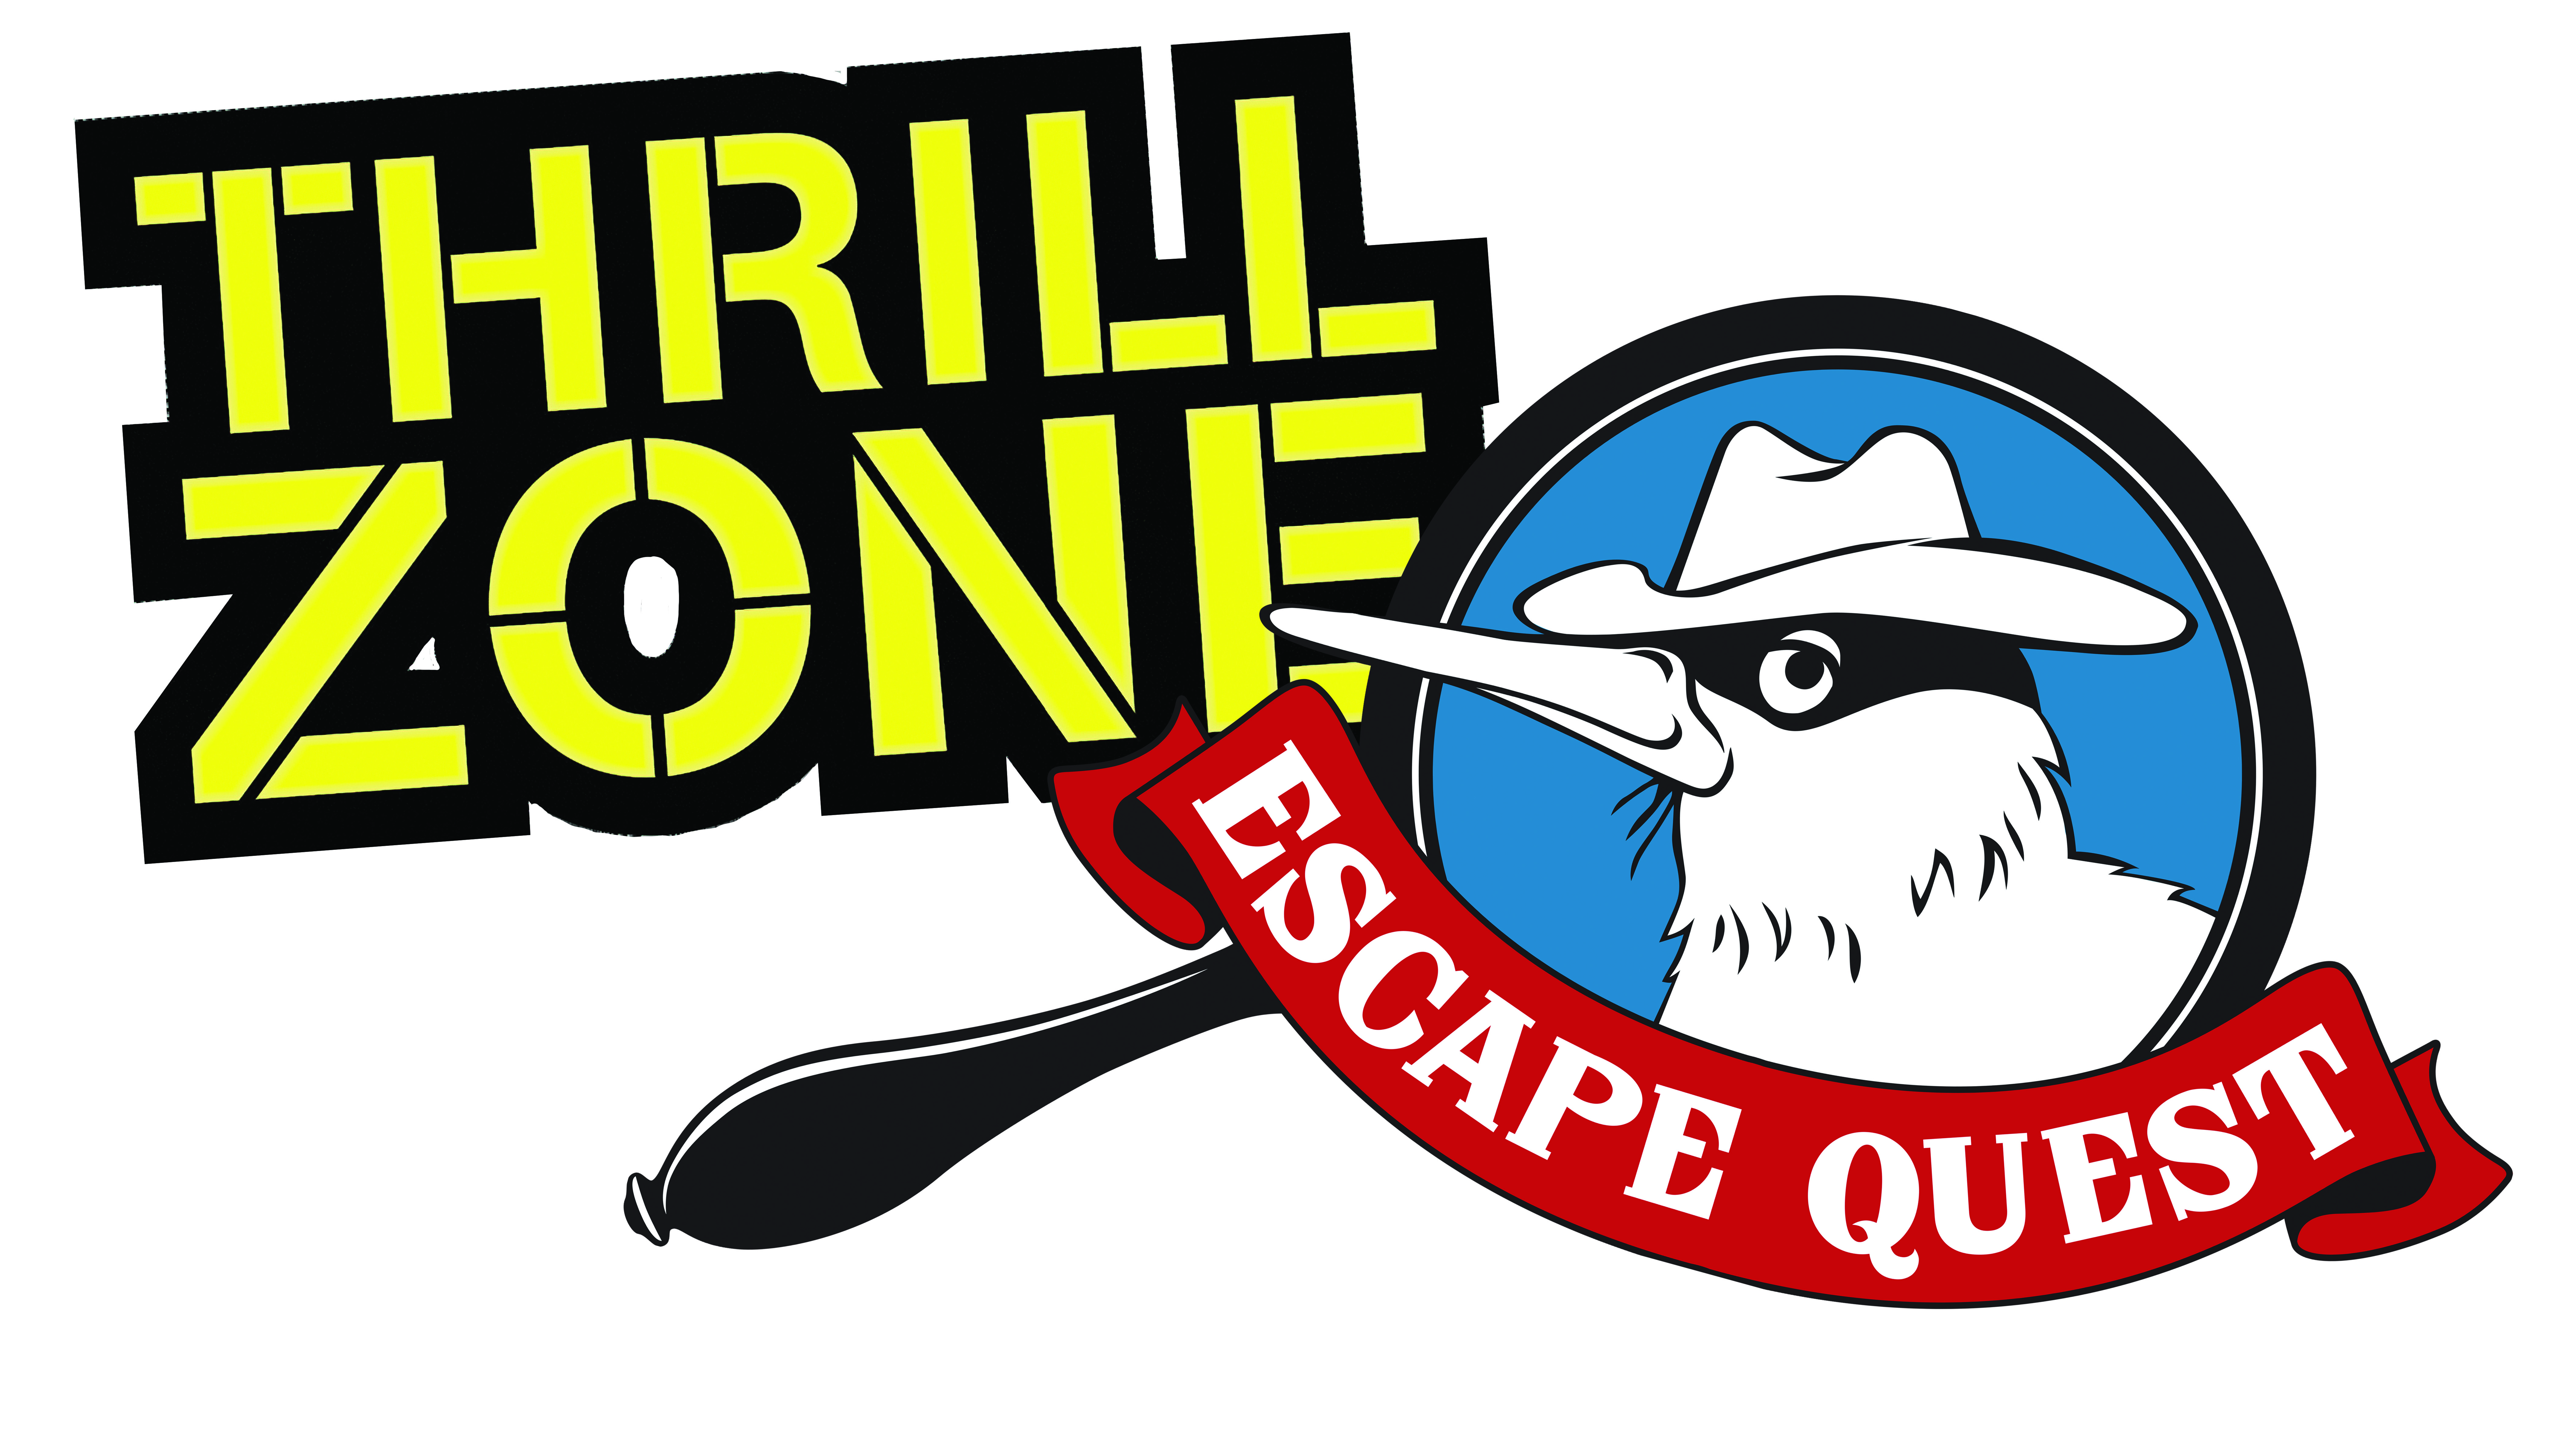 
Thrillzone / Escape Quest